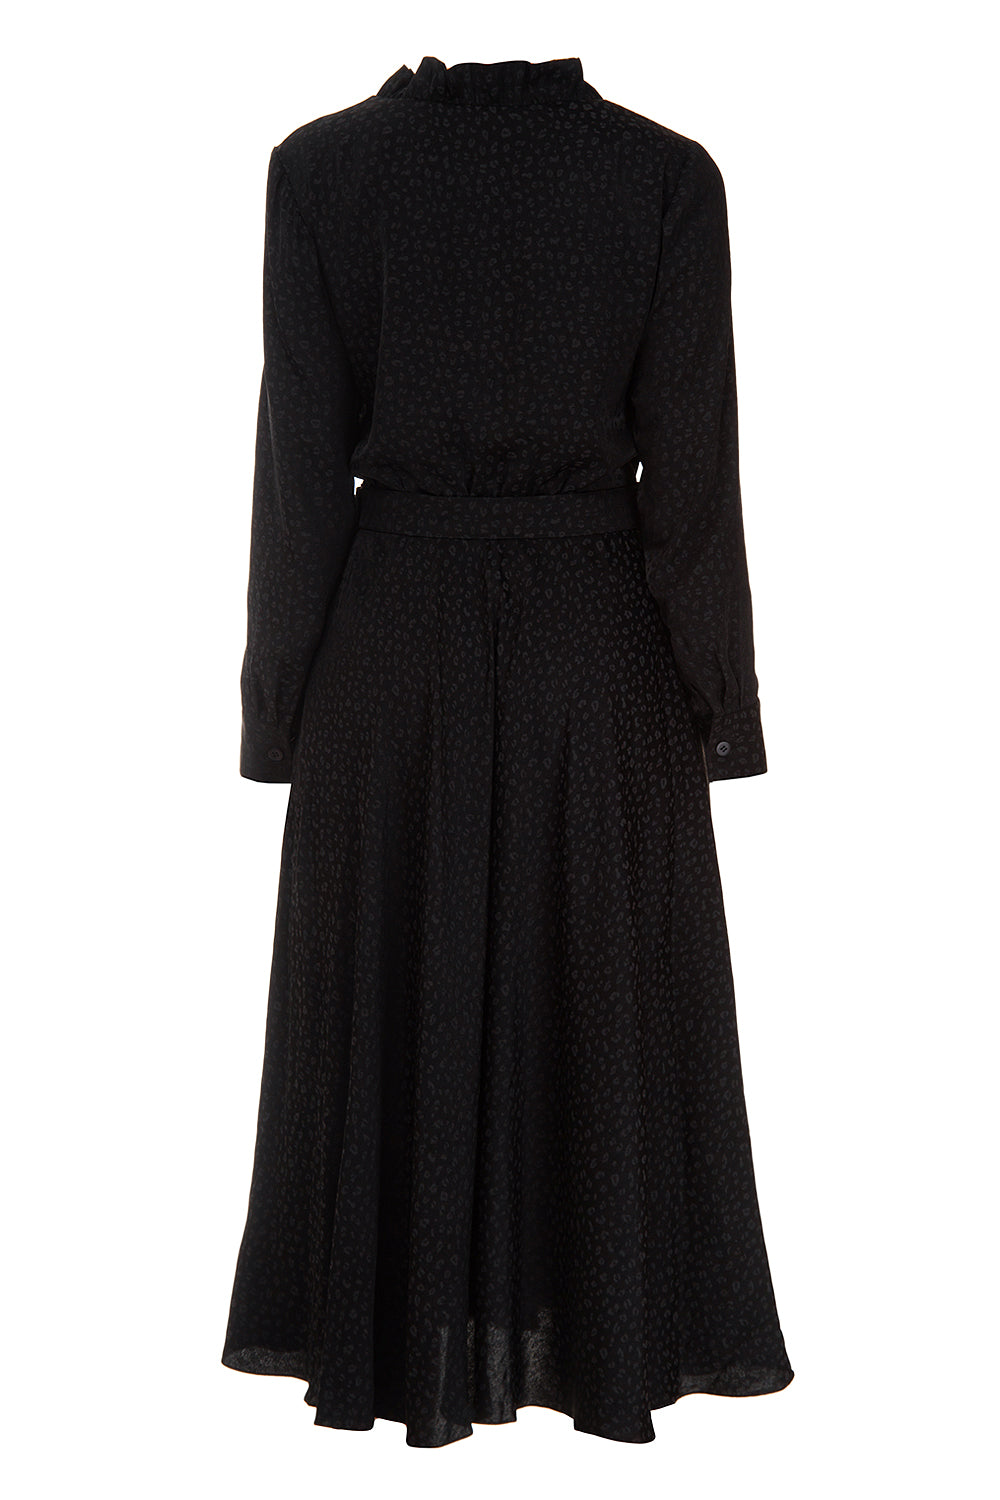 Black jacquard dress with ruffle